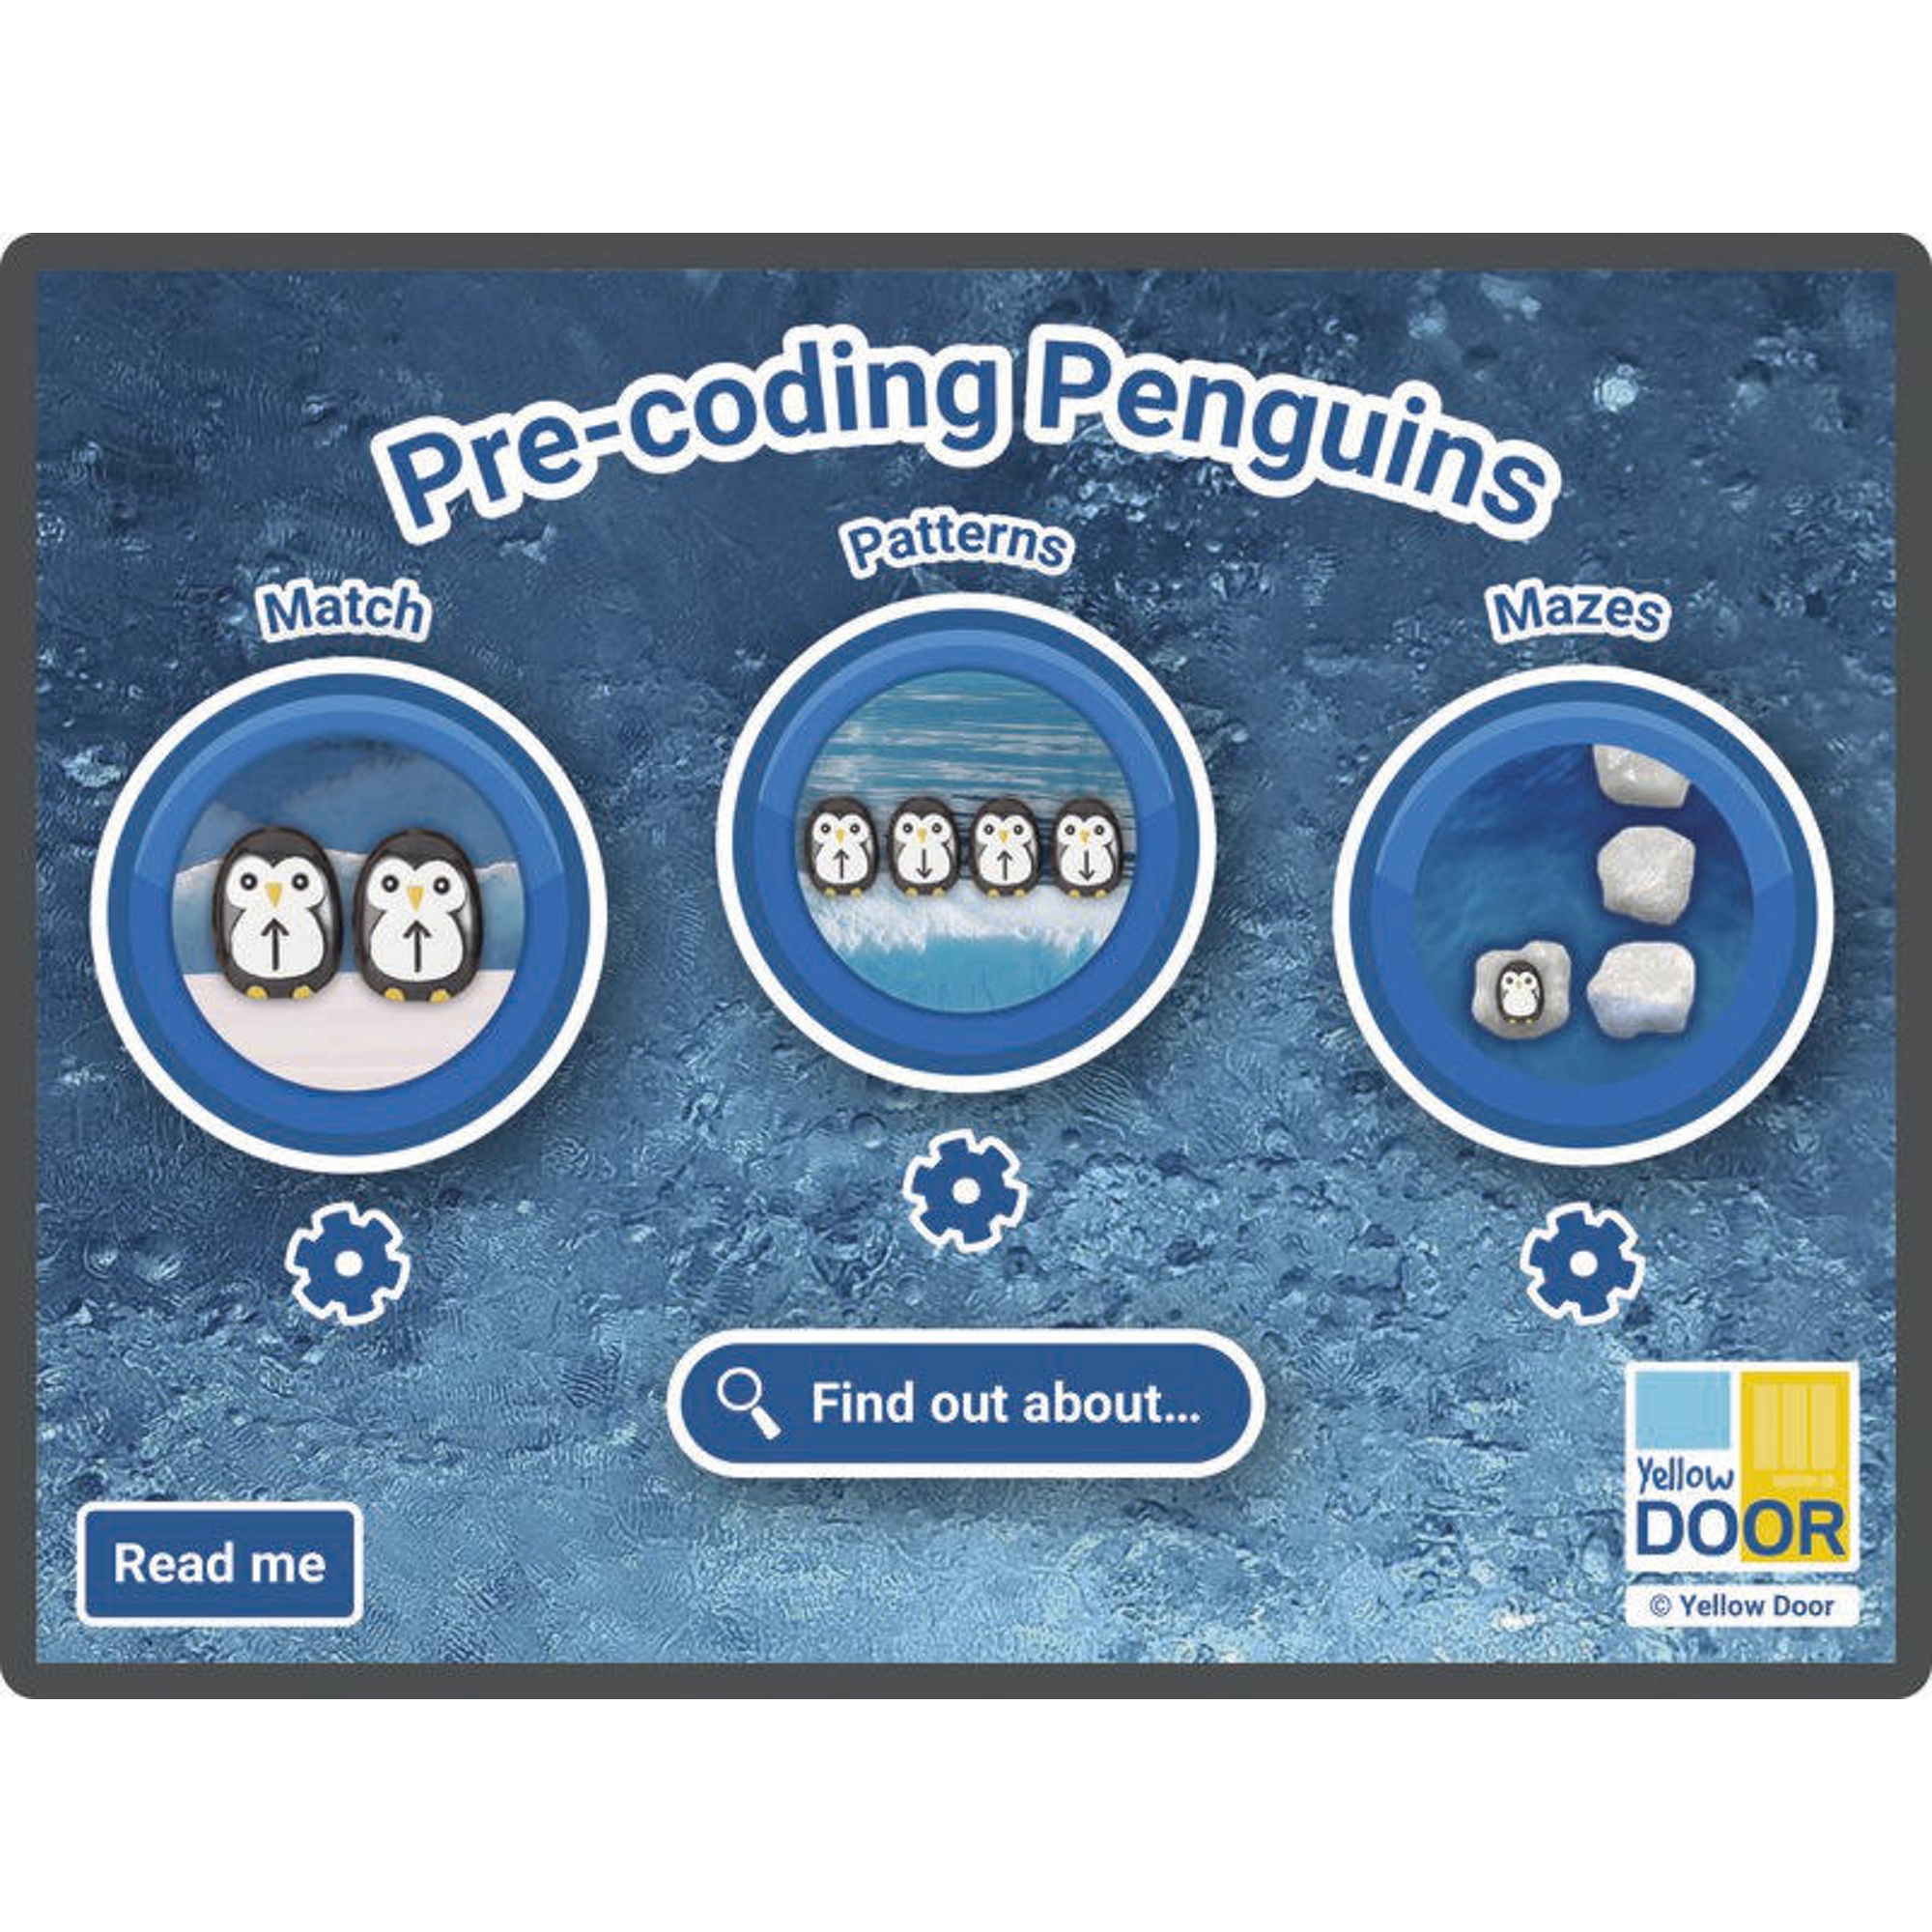 Pre-coding Penguins App (6 device licence)